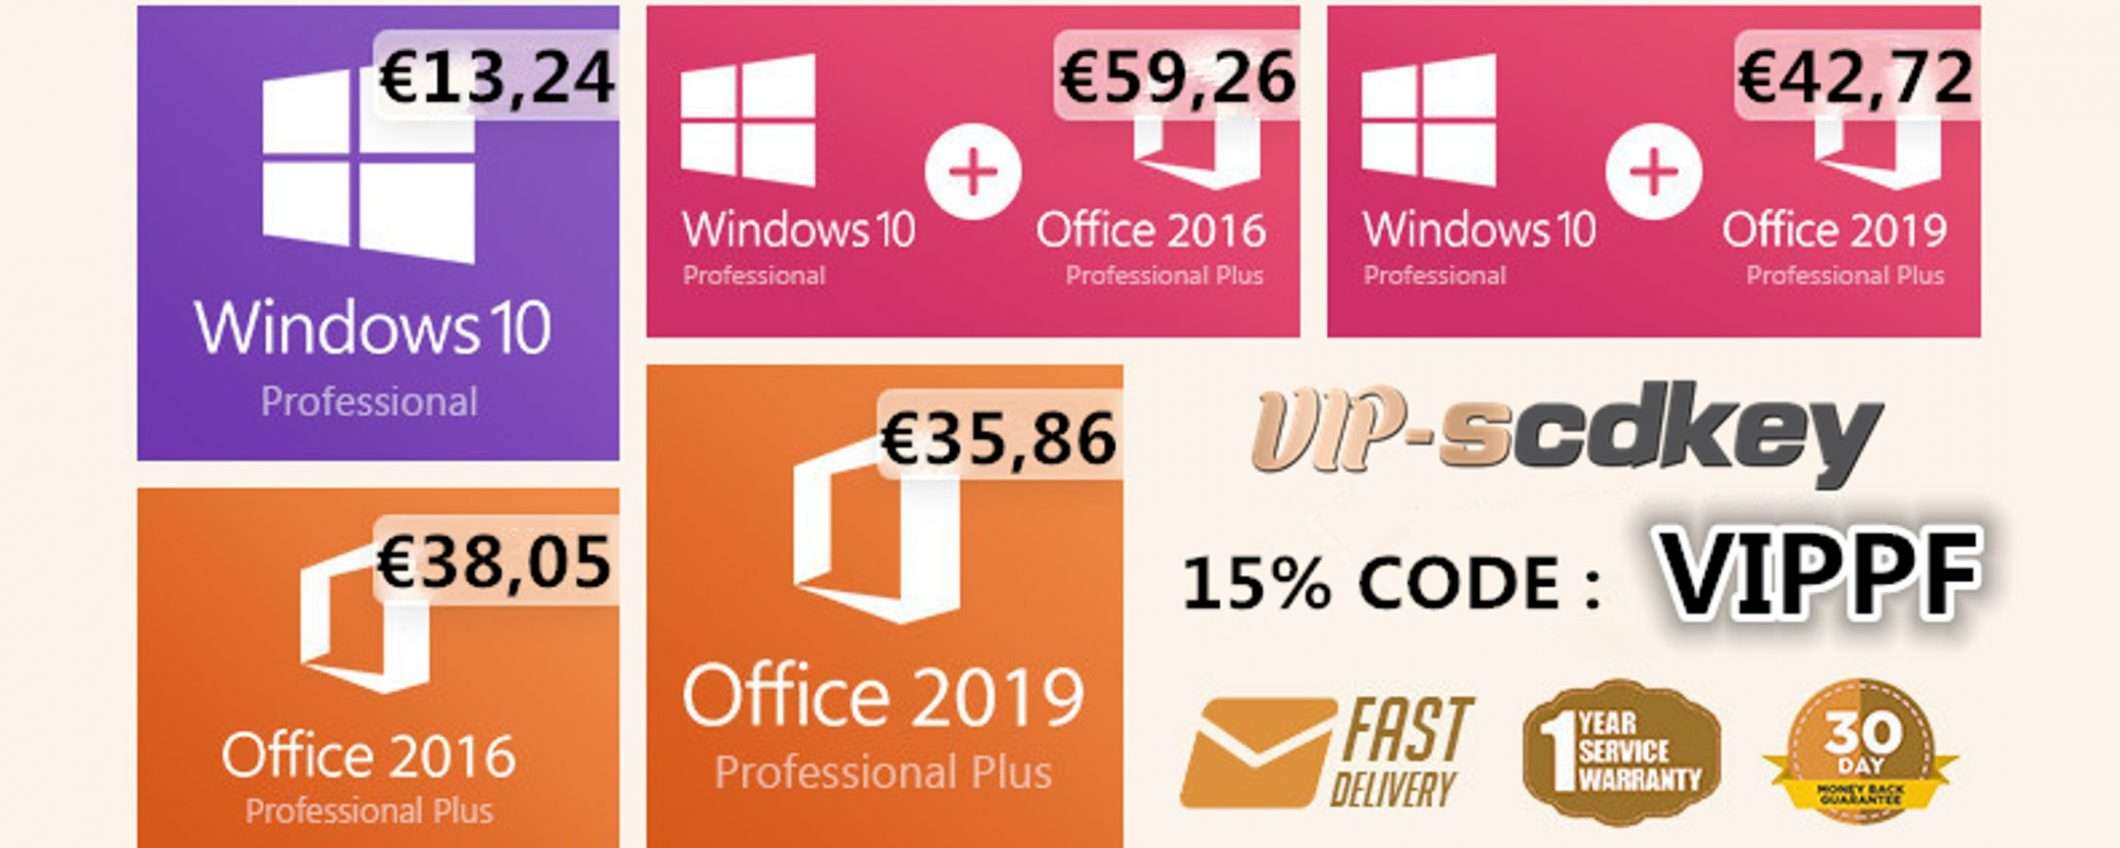 VIP-scdkey Summer Sale: Windows 10 PRO OEM €13, Office 2019 €35